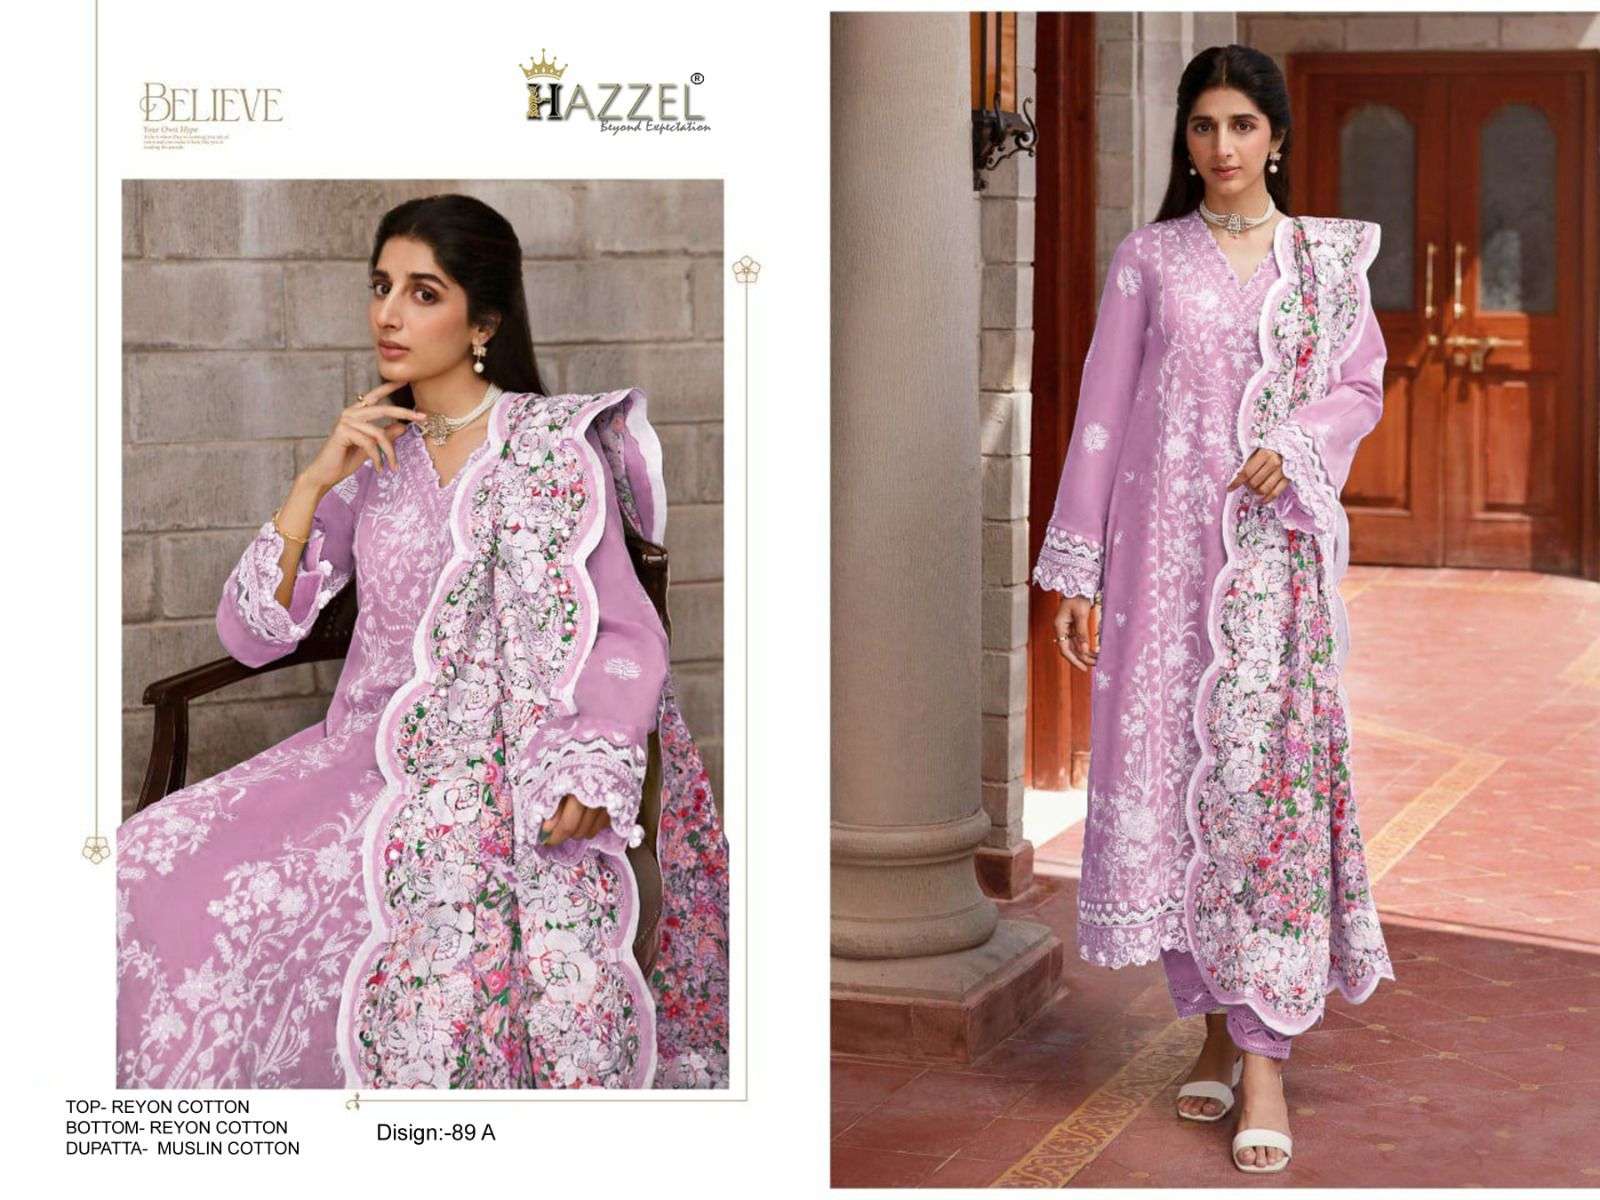 Hazzel 089 A To D Rayon Pakistani Suits Wholesale catalog